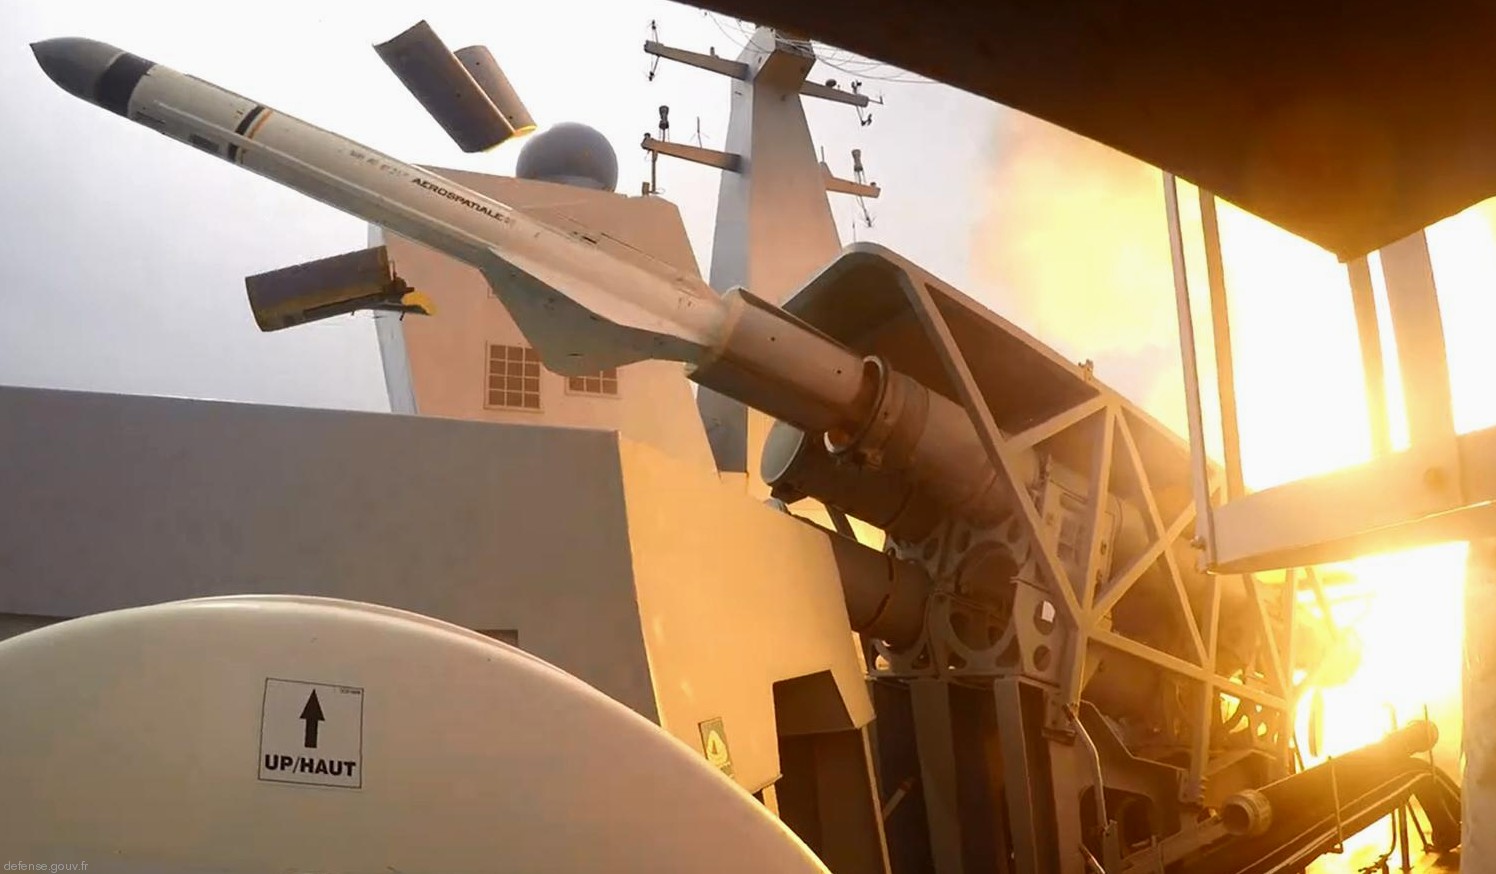 mm40 exocet ssm missile mbda navy 02 anti ship